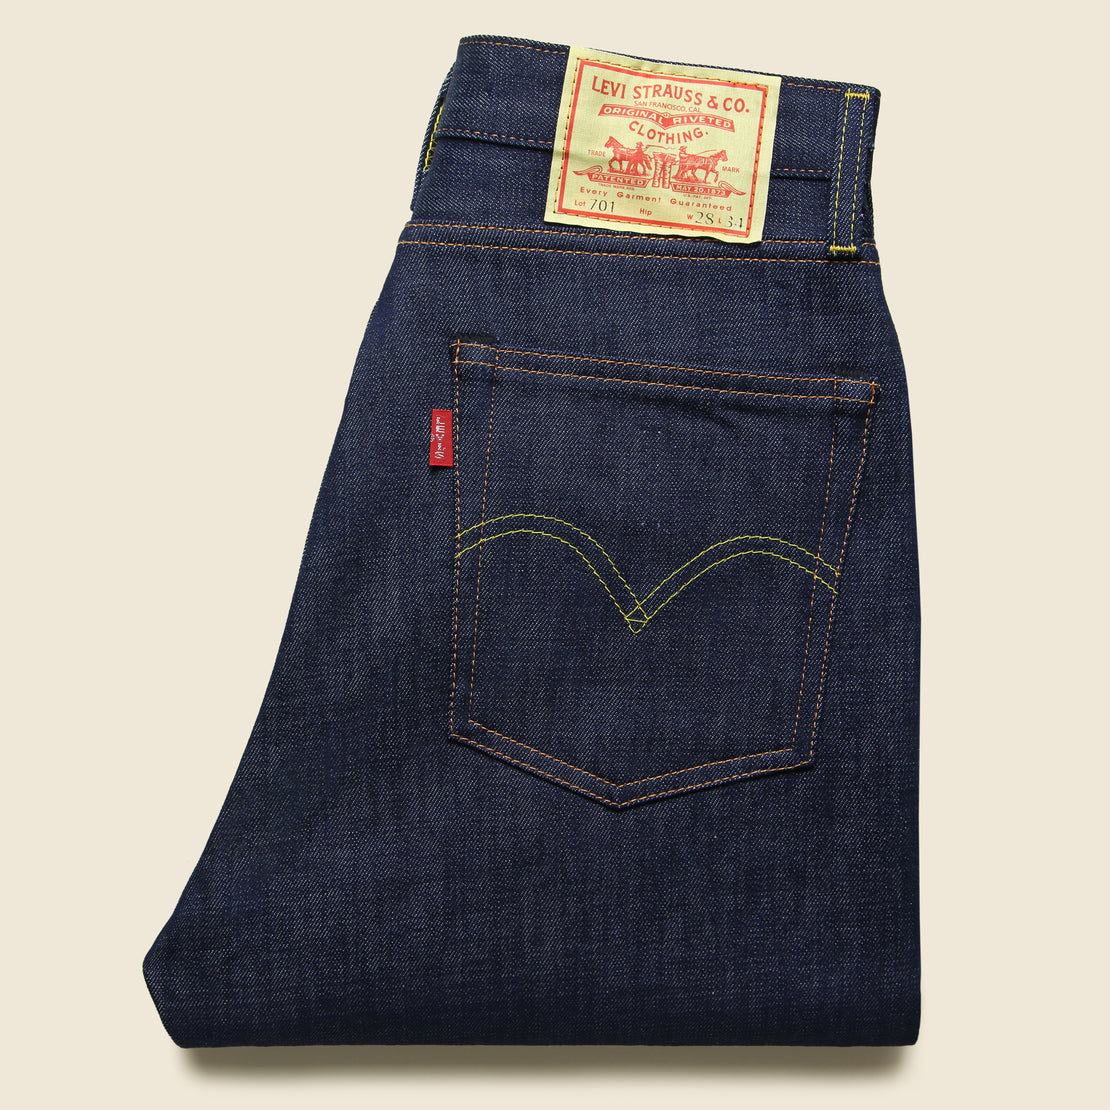 1950s 701 Jean - Rinsed Indigo - Levis Vintage Clothing - STAG Provisions - W - Pants - Denim